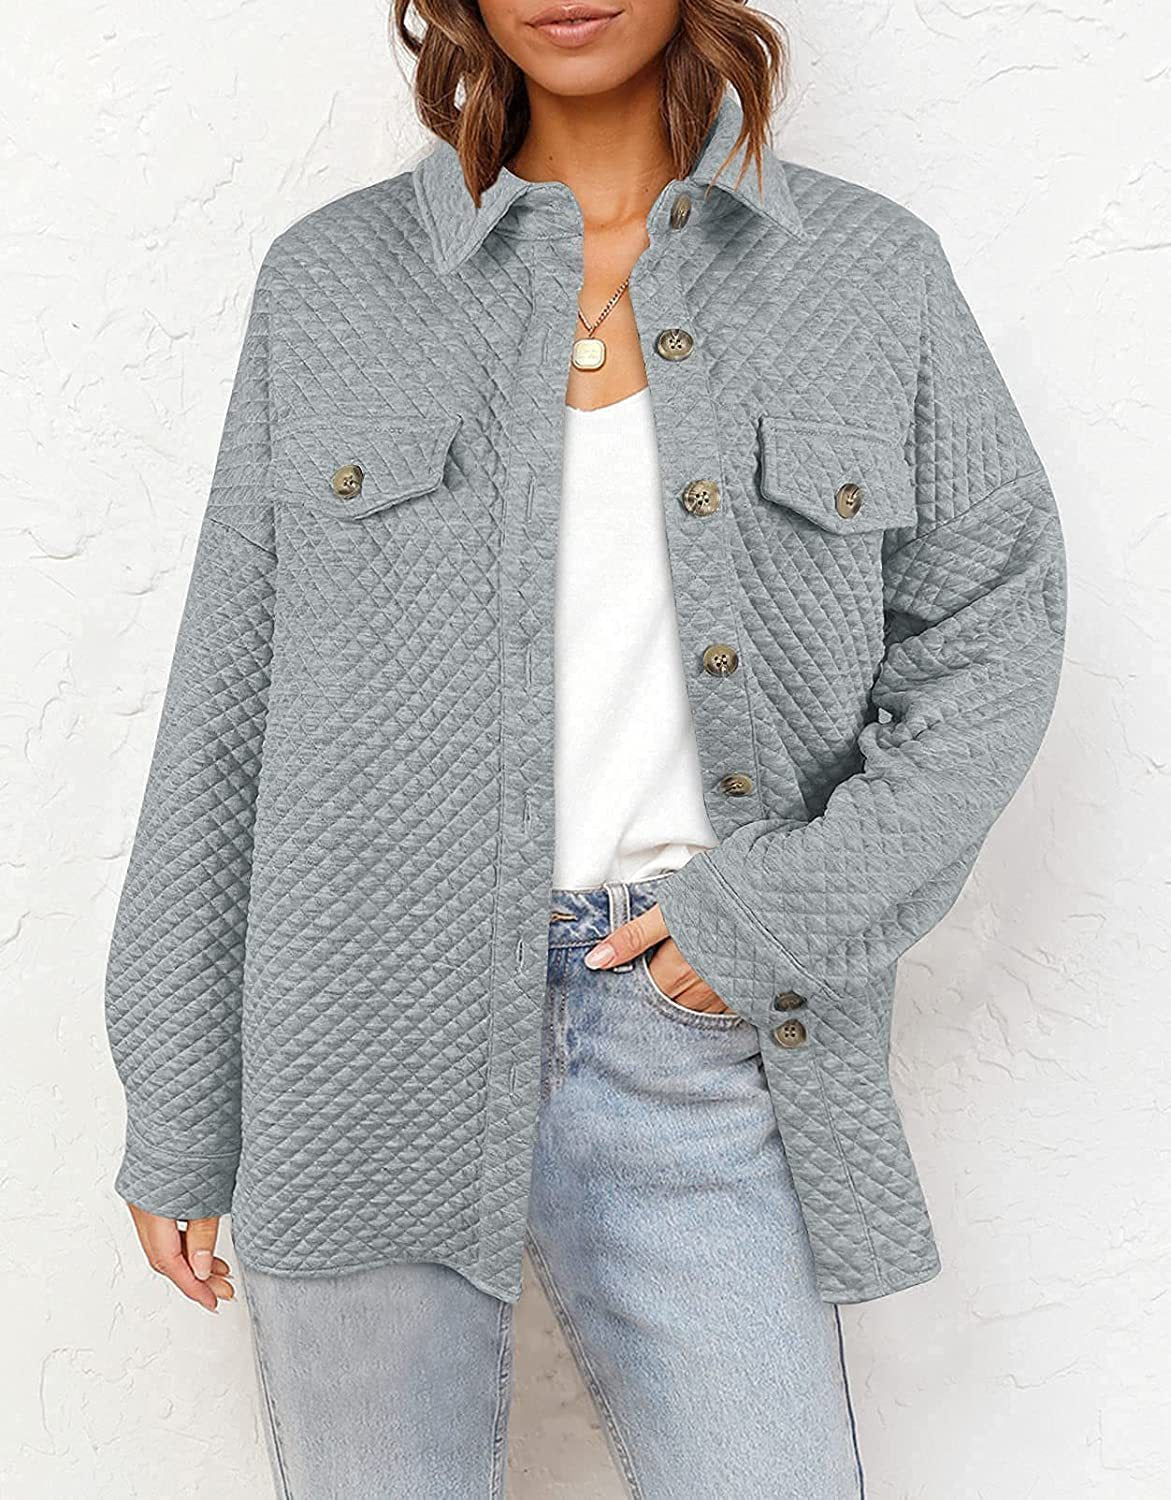 Women's Solid Color Diamond Pocket Lightweight Casual Jacket Coat